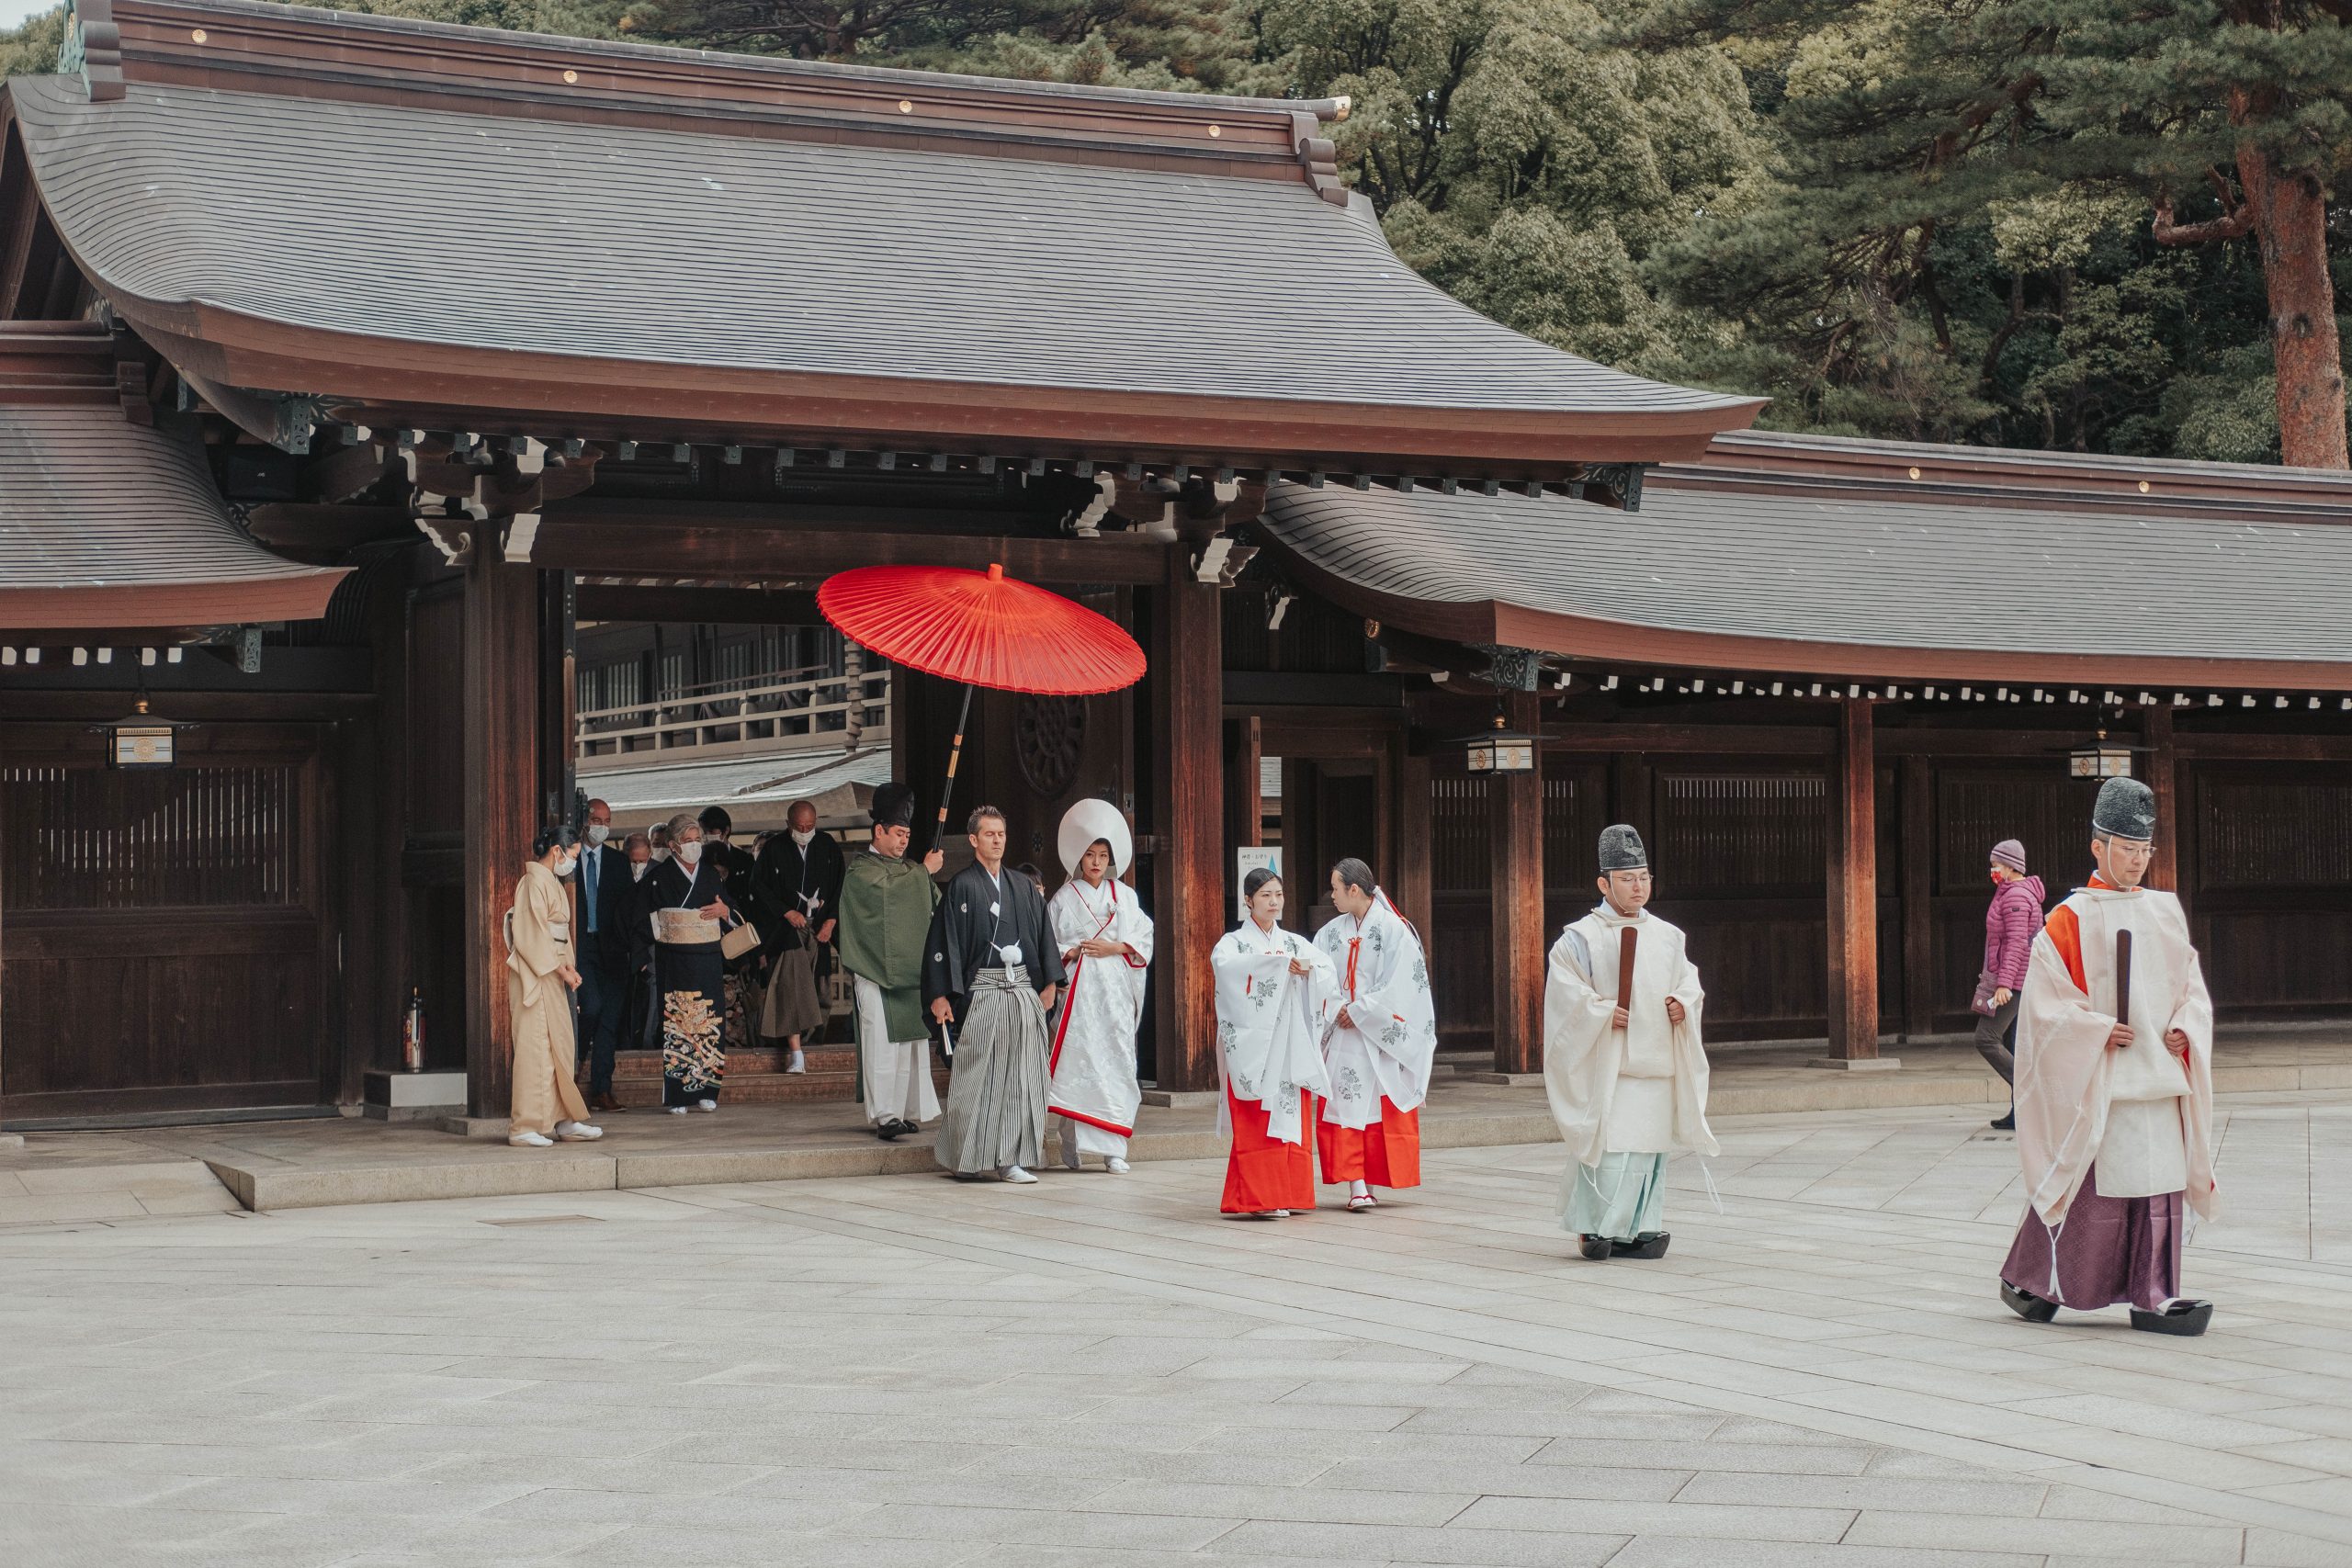 Wedding festivities at Meiji Shrine in Tokyo